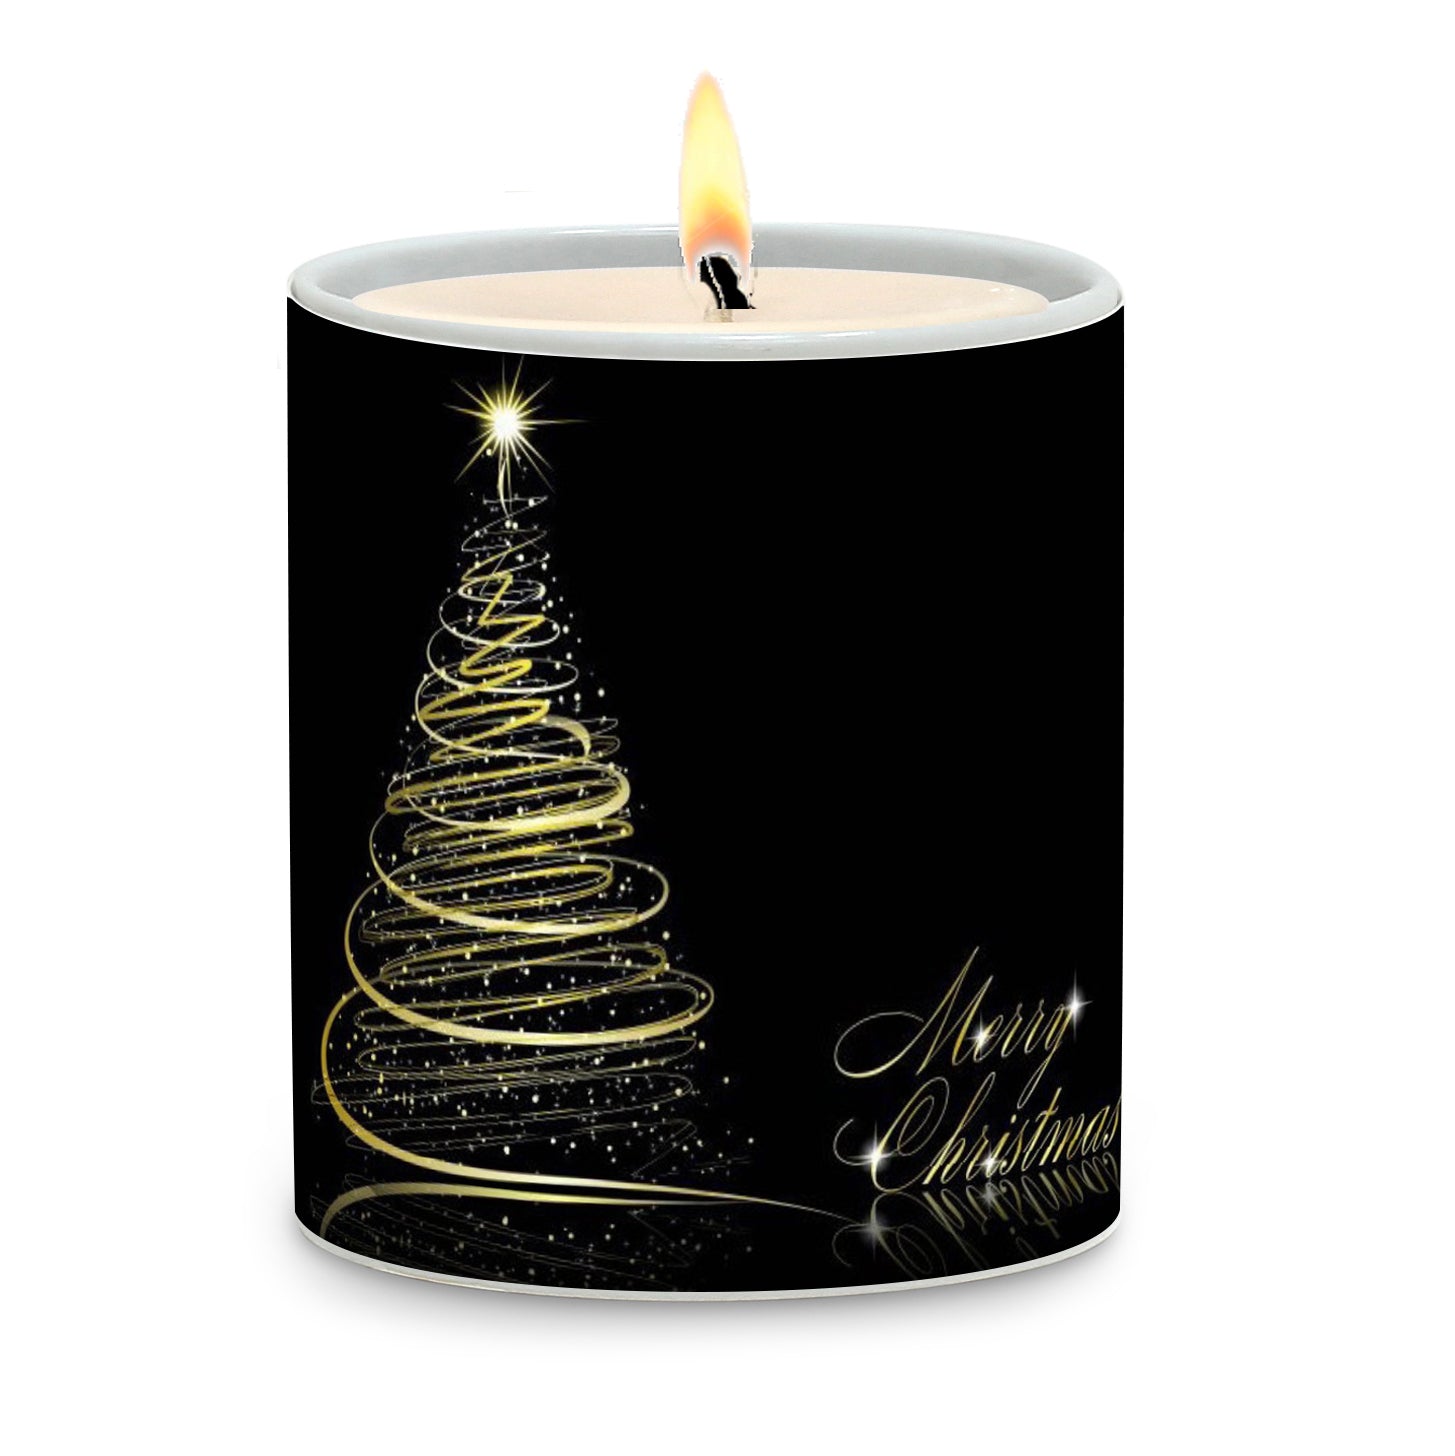 SUBLIMART: Christmas - Soy Wax Candle (Design #XMS17) - Artistica.com